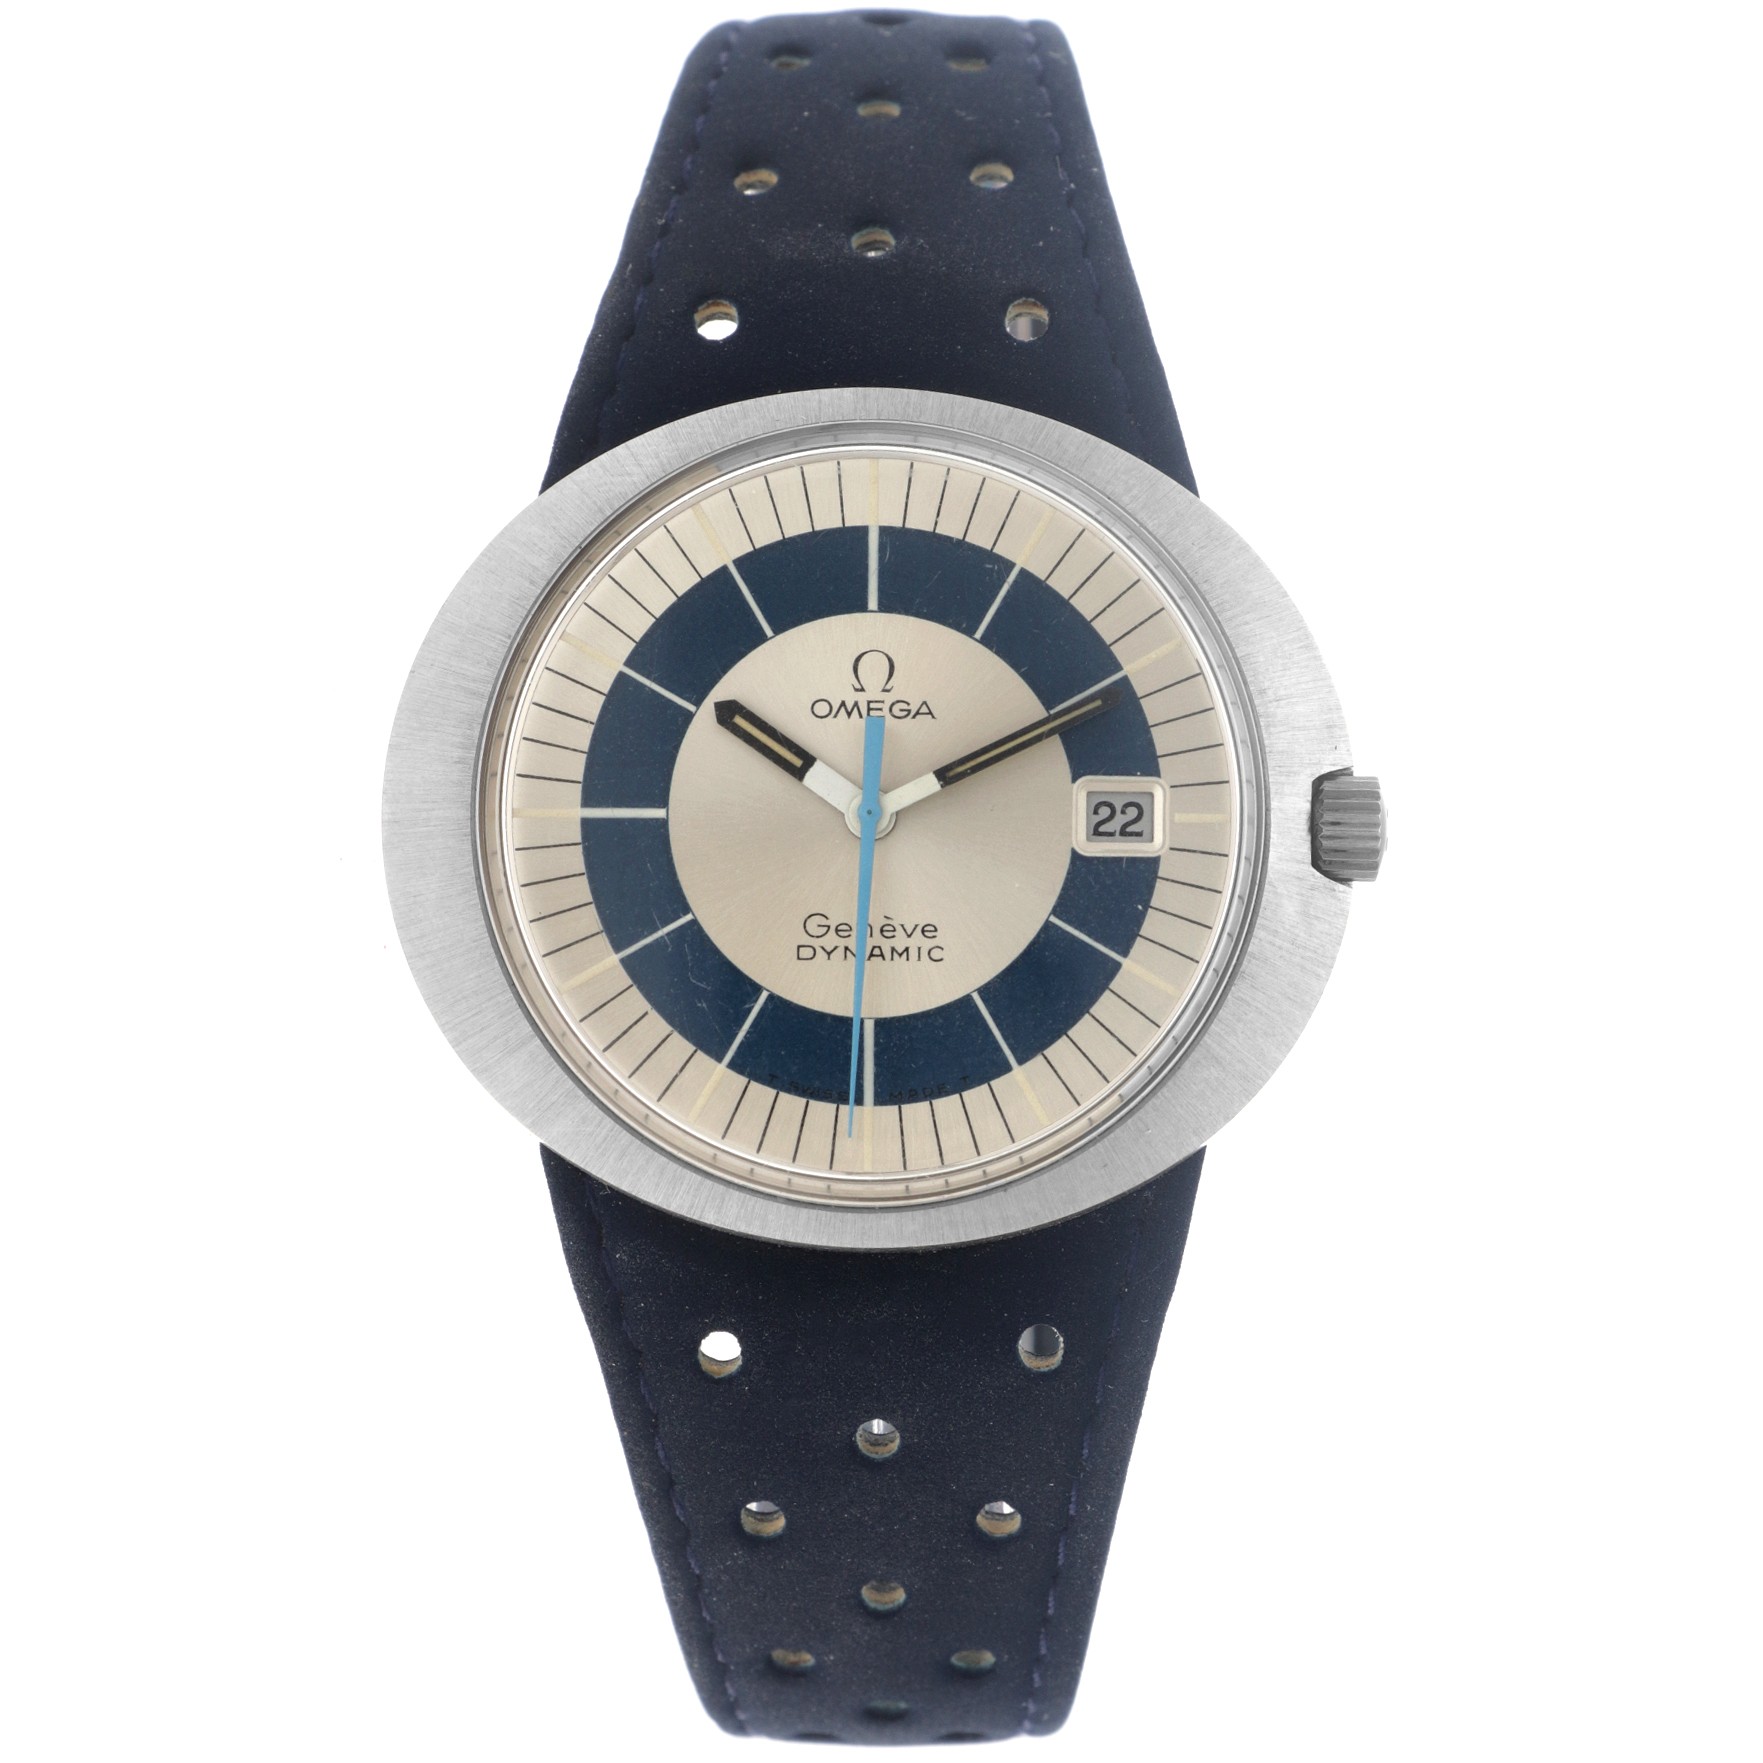 No Reserve - Omega Genève Dynamic 166.079 - Men's watch - approx. 1970.